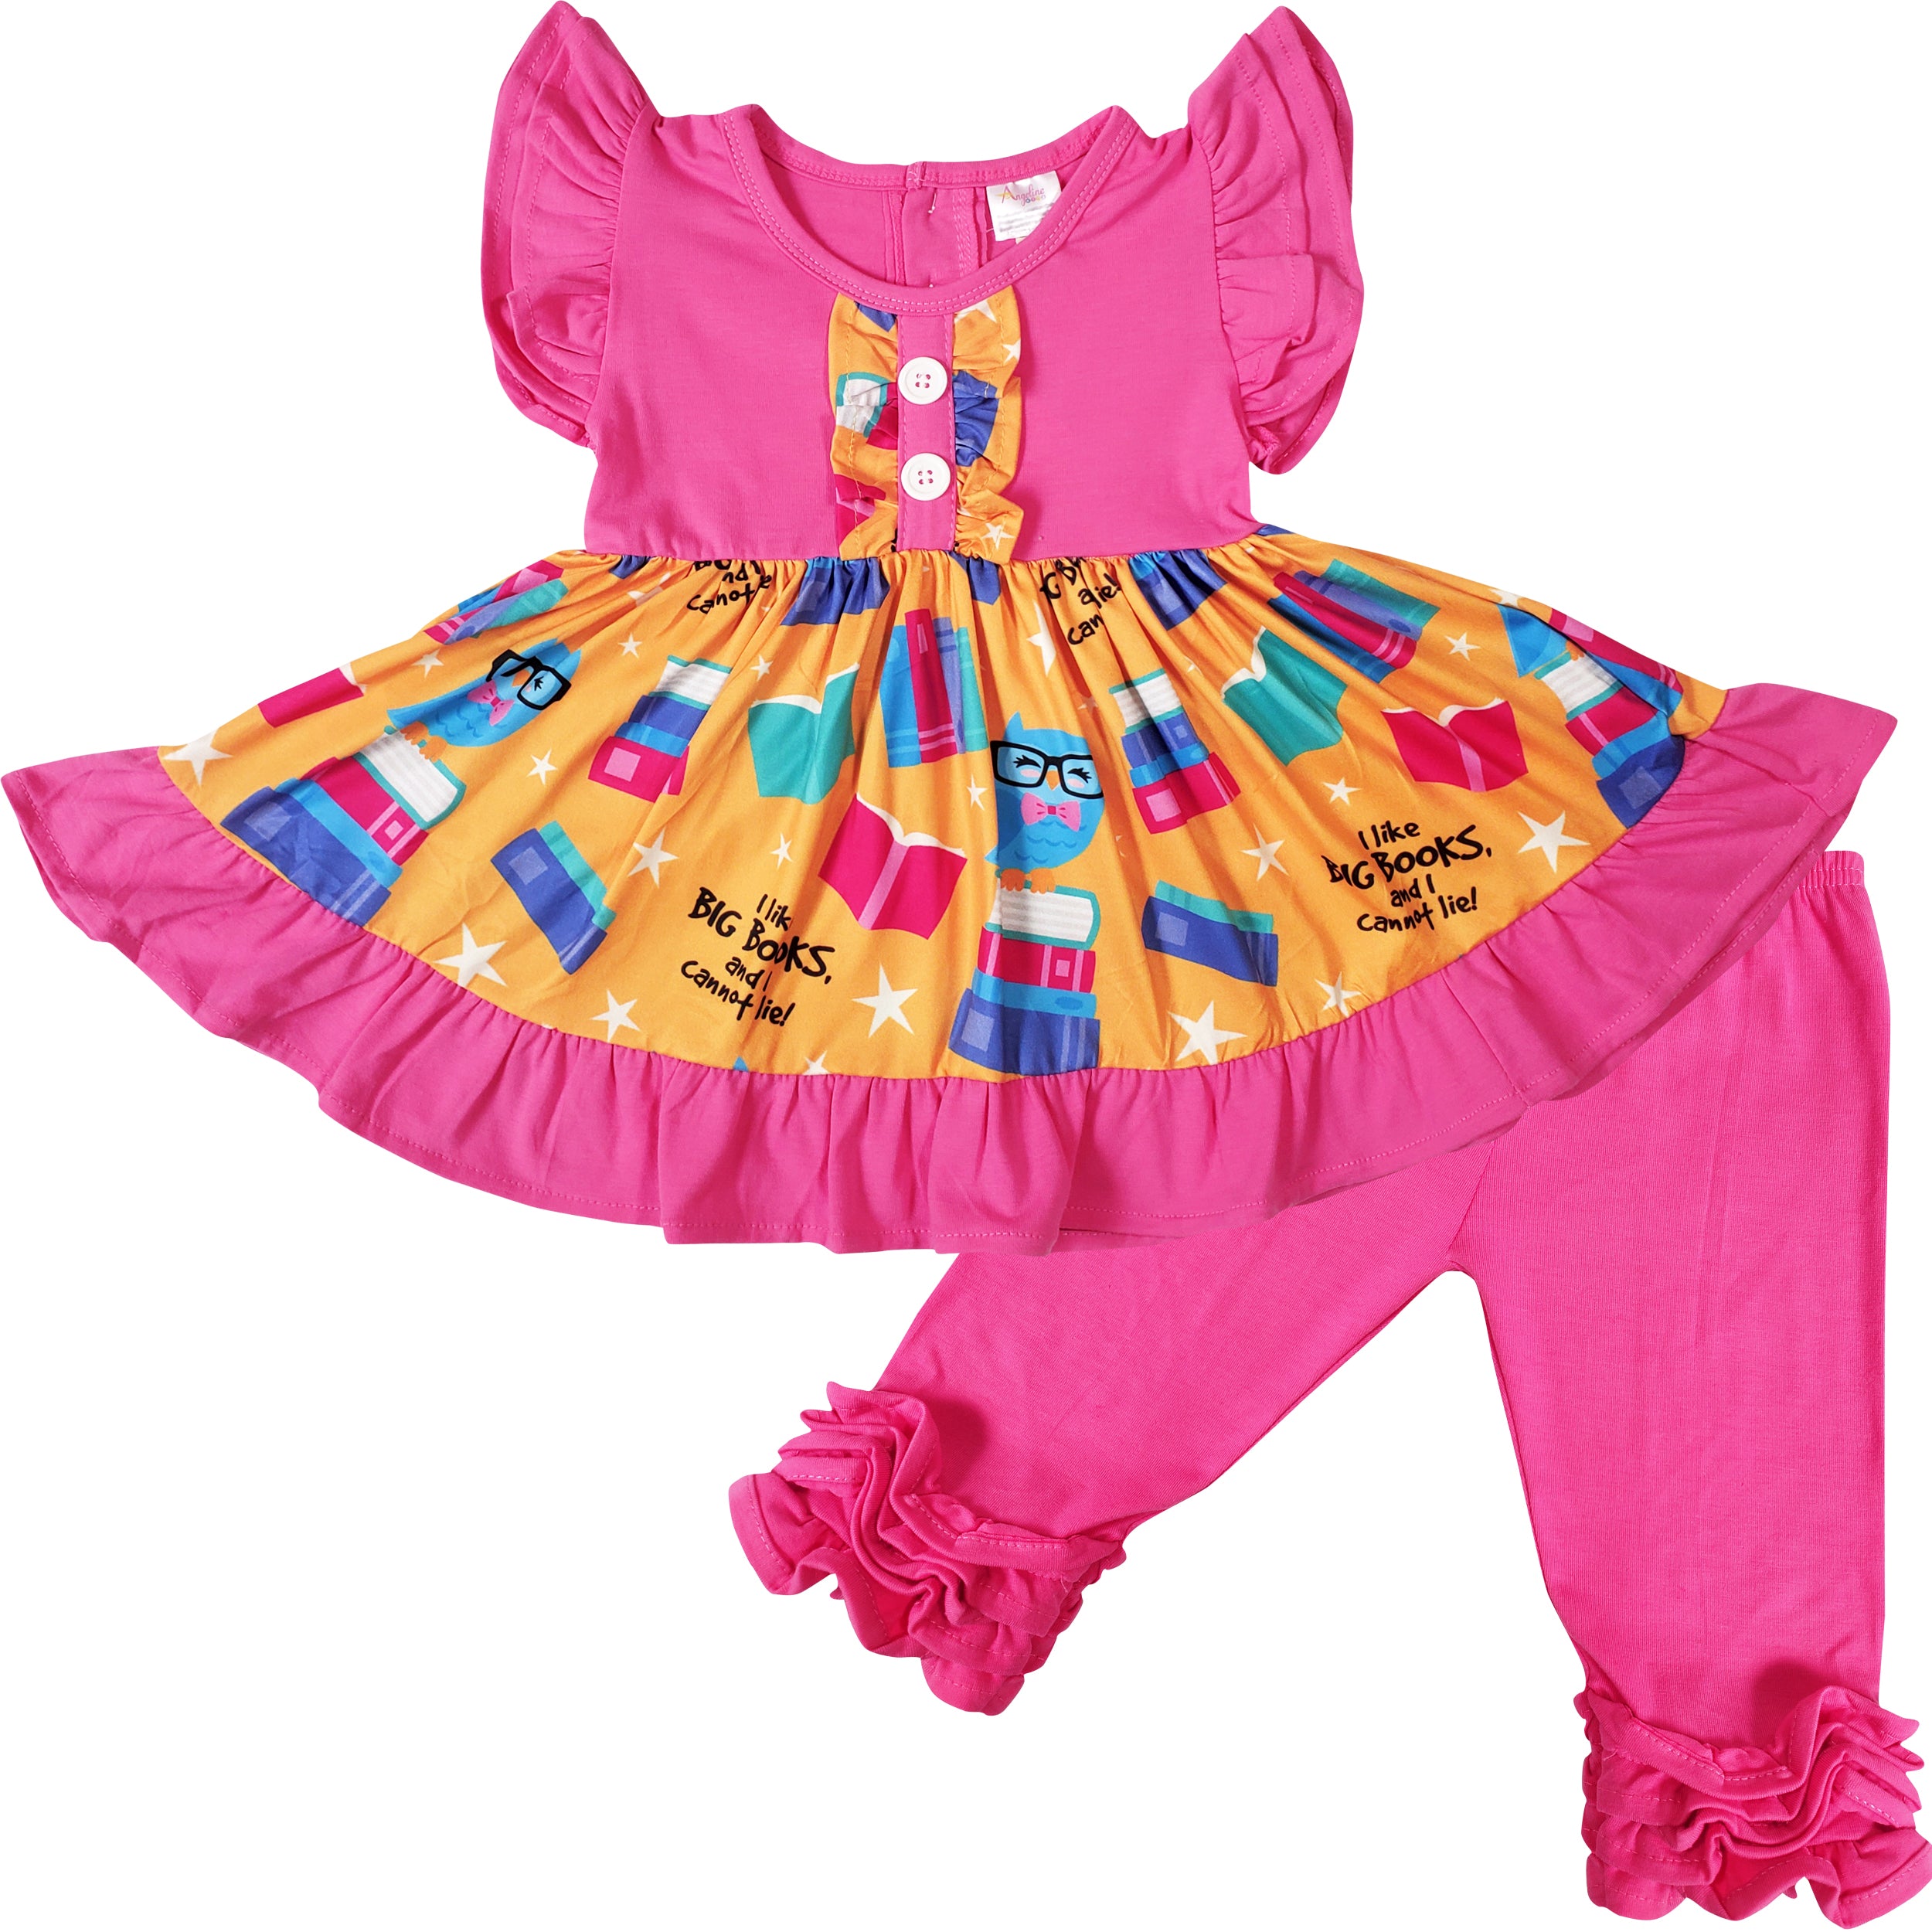 Toddler Girls Back To School Owl Ruffle Top & Capris Set - Hot Pink - Angeline Kids